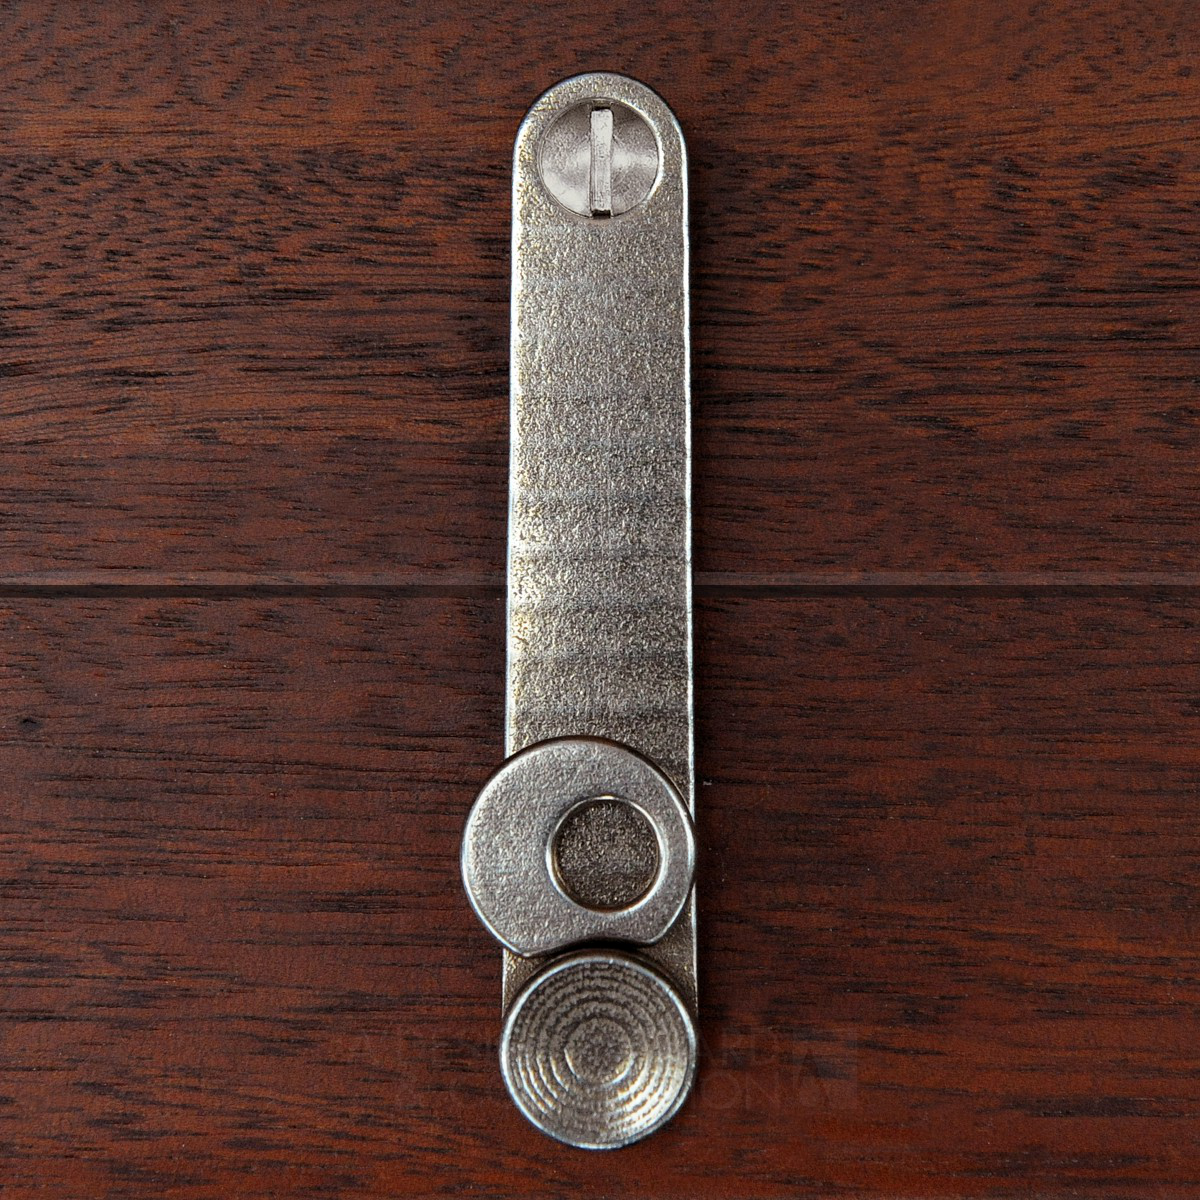 Minimal Sash Lock Window Hardware by Jeffrey Klug